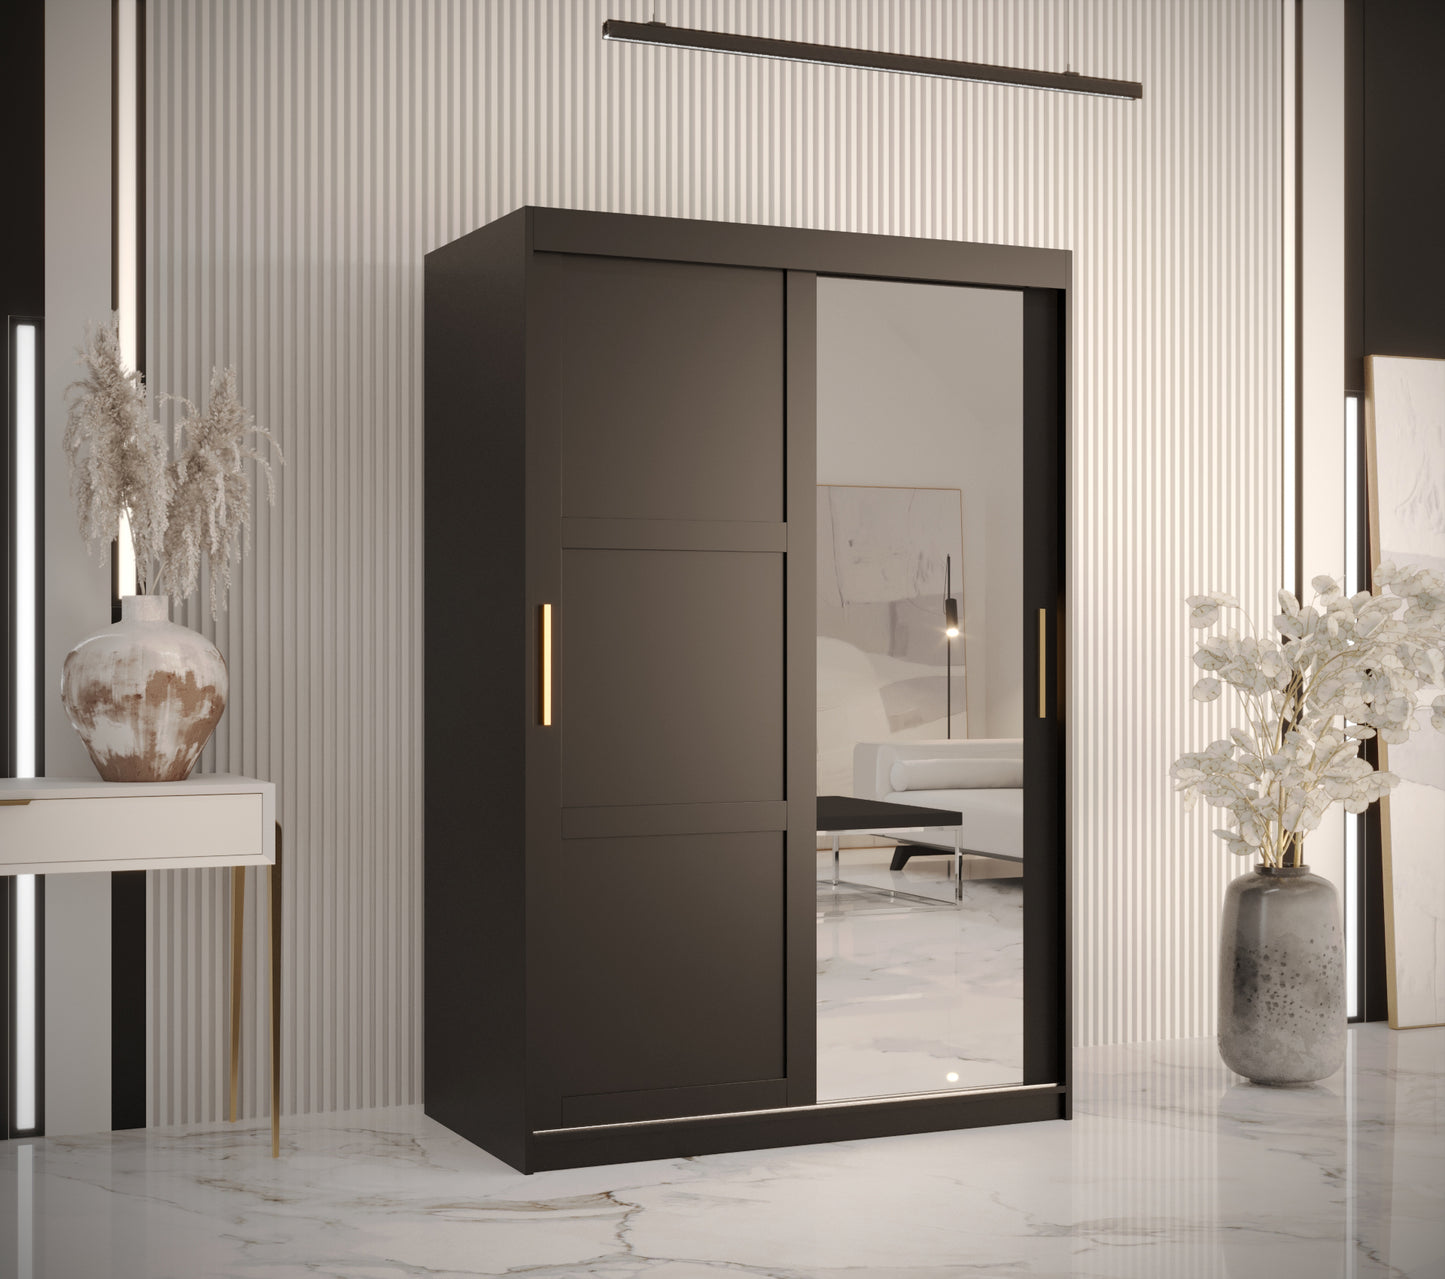 RAMIRA 2 - Wardrobe Sliding Door with Mirror in Black or White Combinations, Shelves, Rails, Drawer optional >120cm<